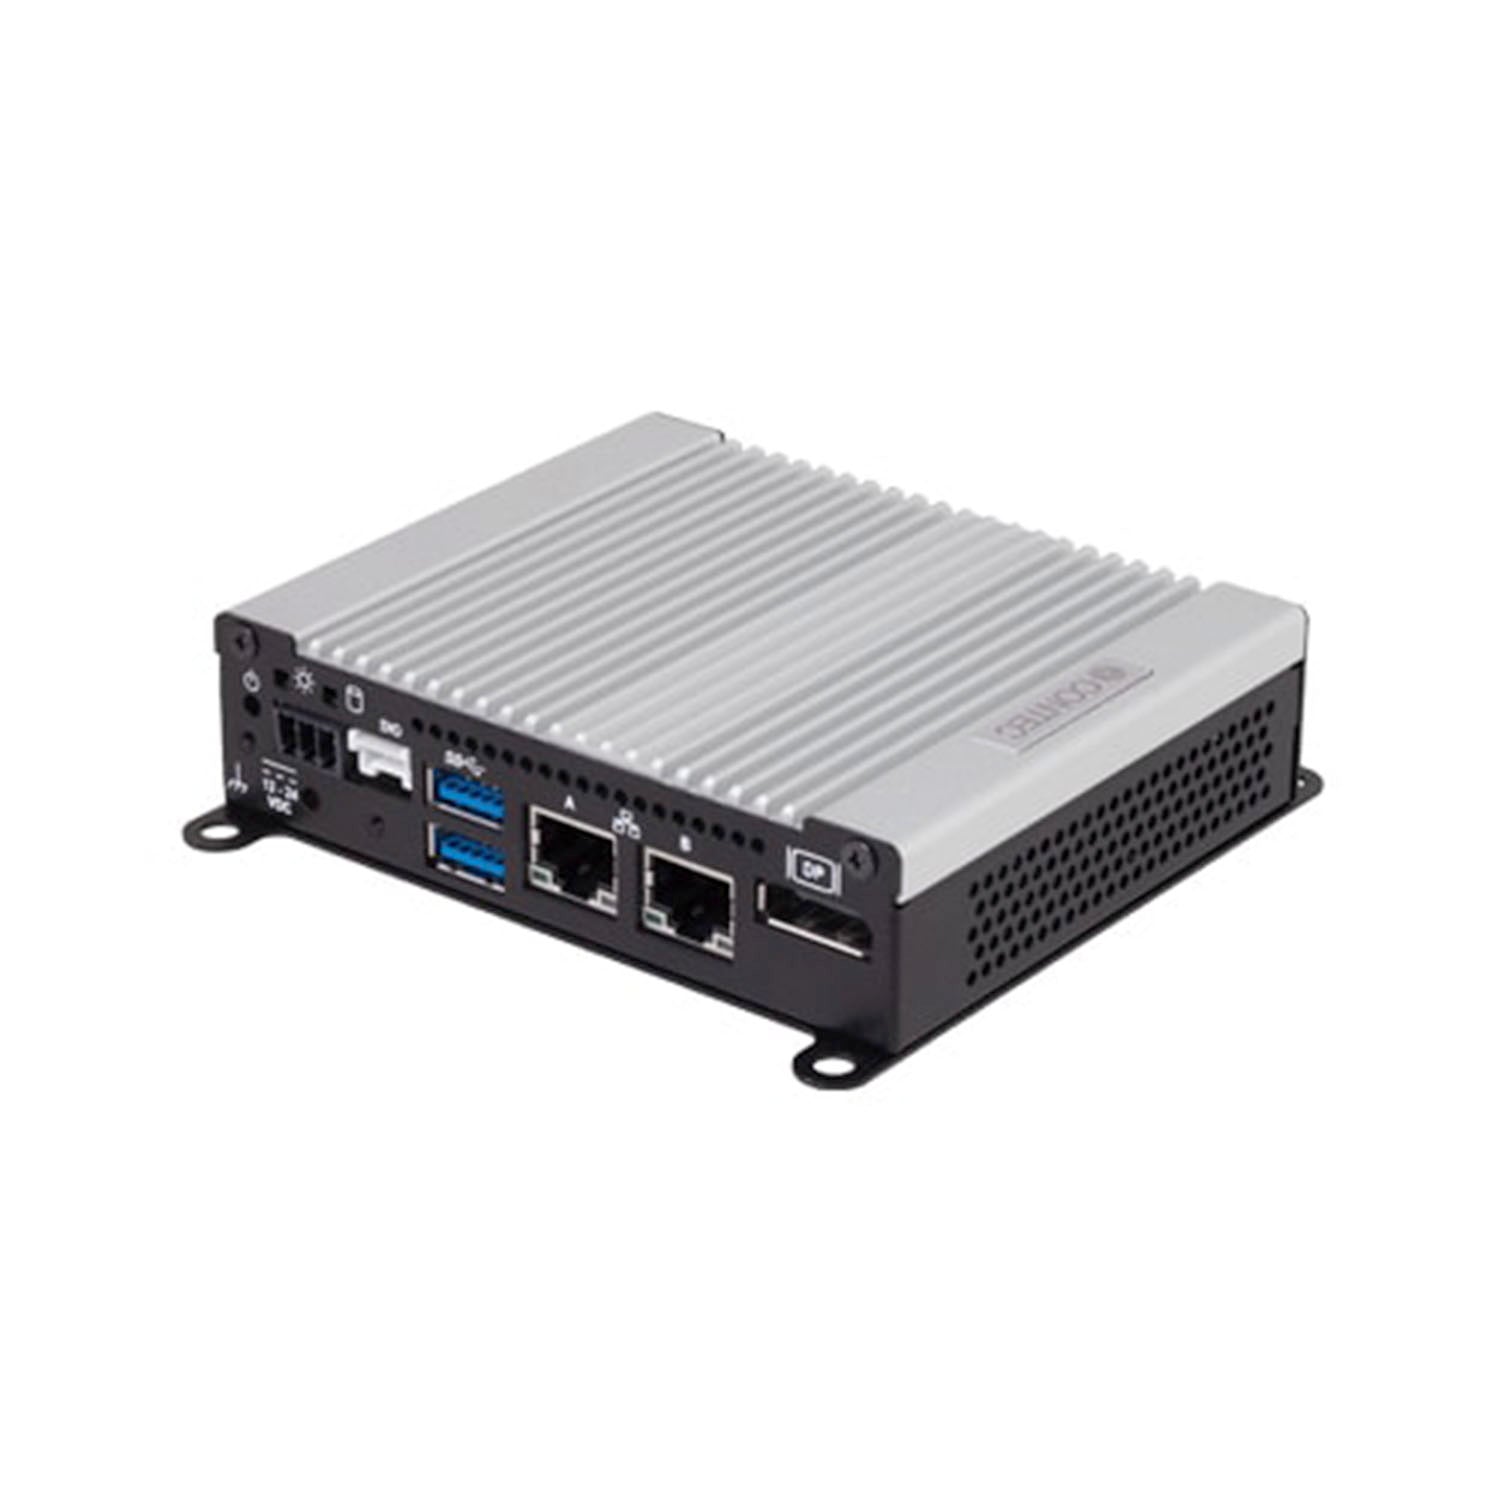 BX-U200 - Fanless Embedded PC / Ultra small design / Atom x5-E3940